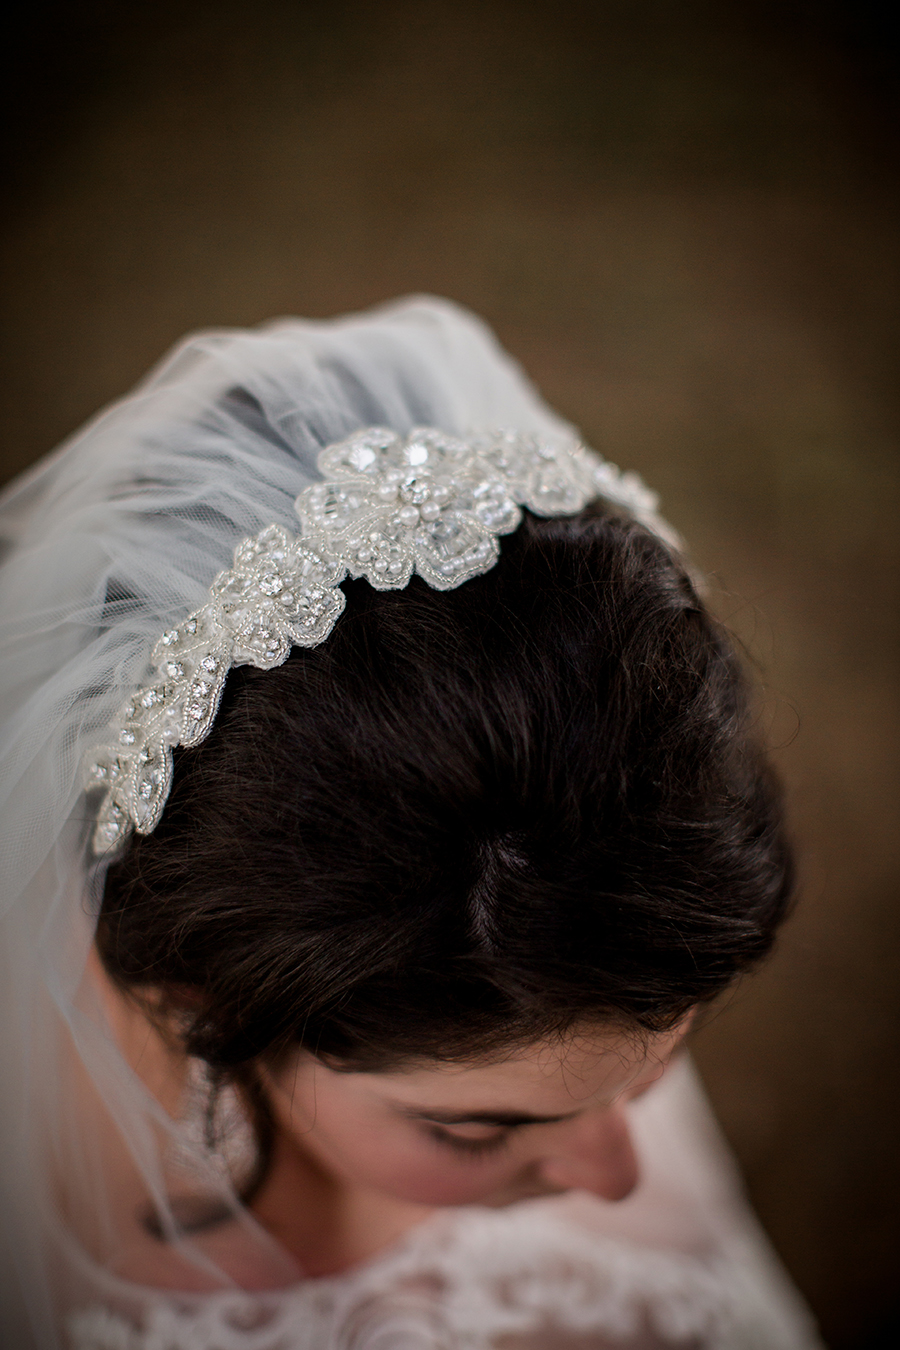 Veil detail at this bridal session at The Barn at High Point Farms by Knoxville Wedding Photographer, Amanda May Photos.